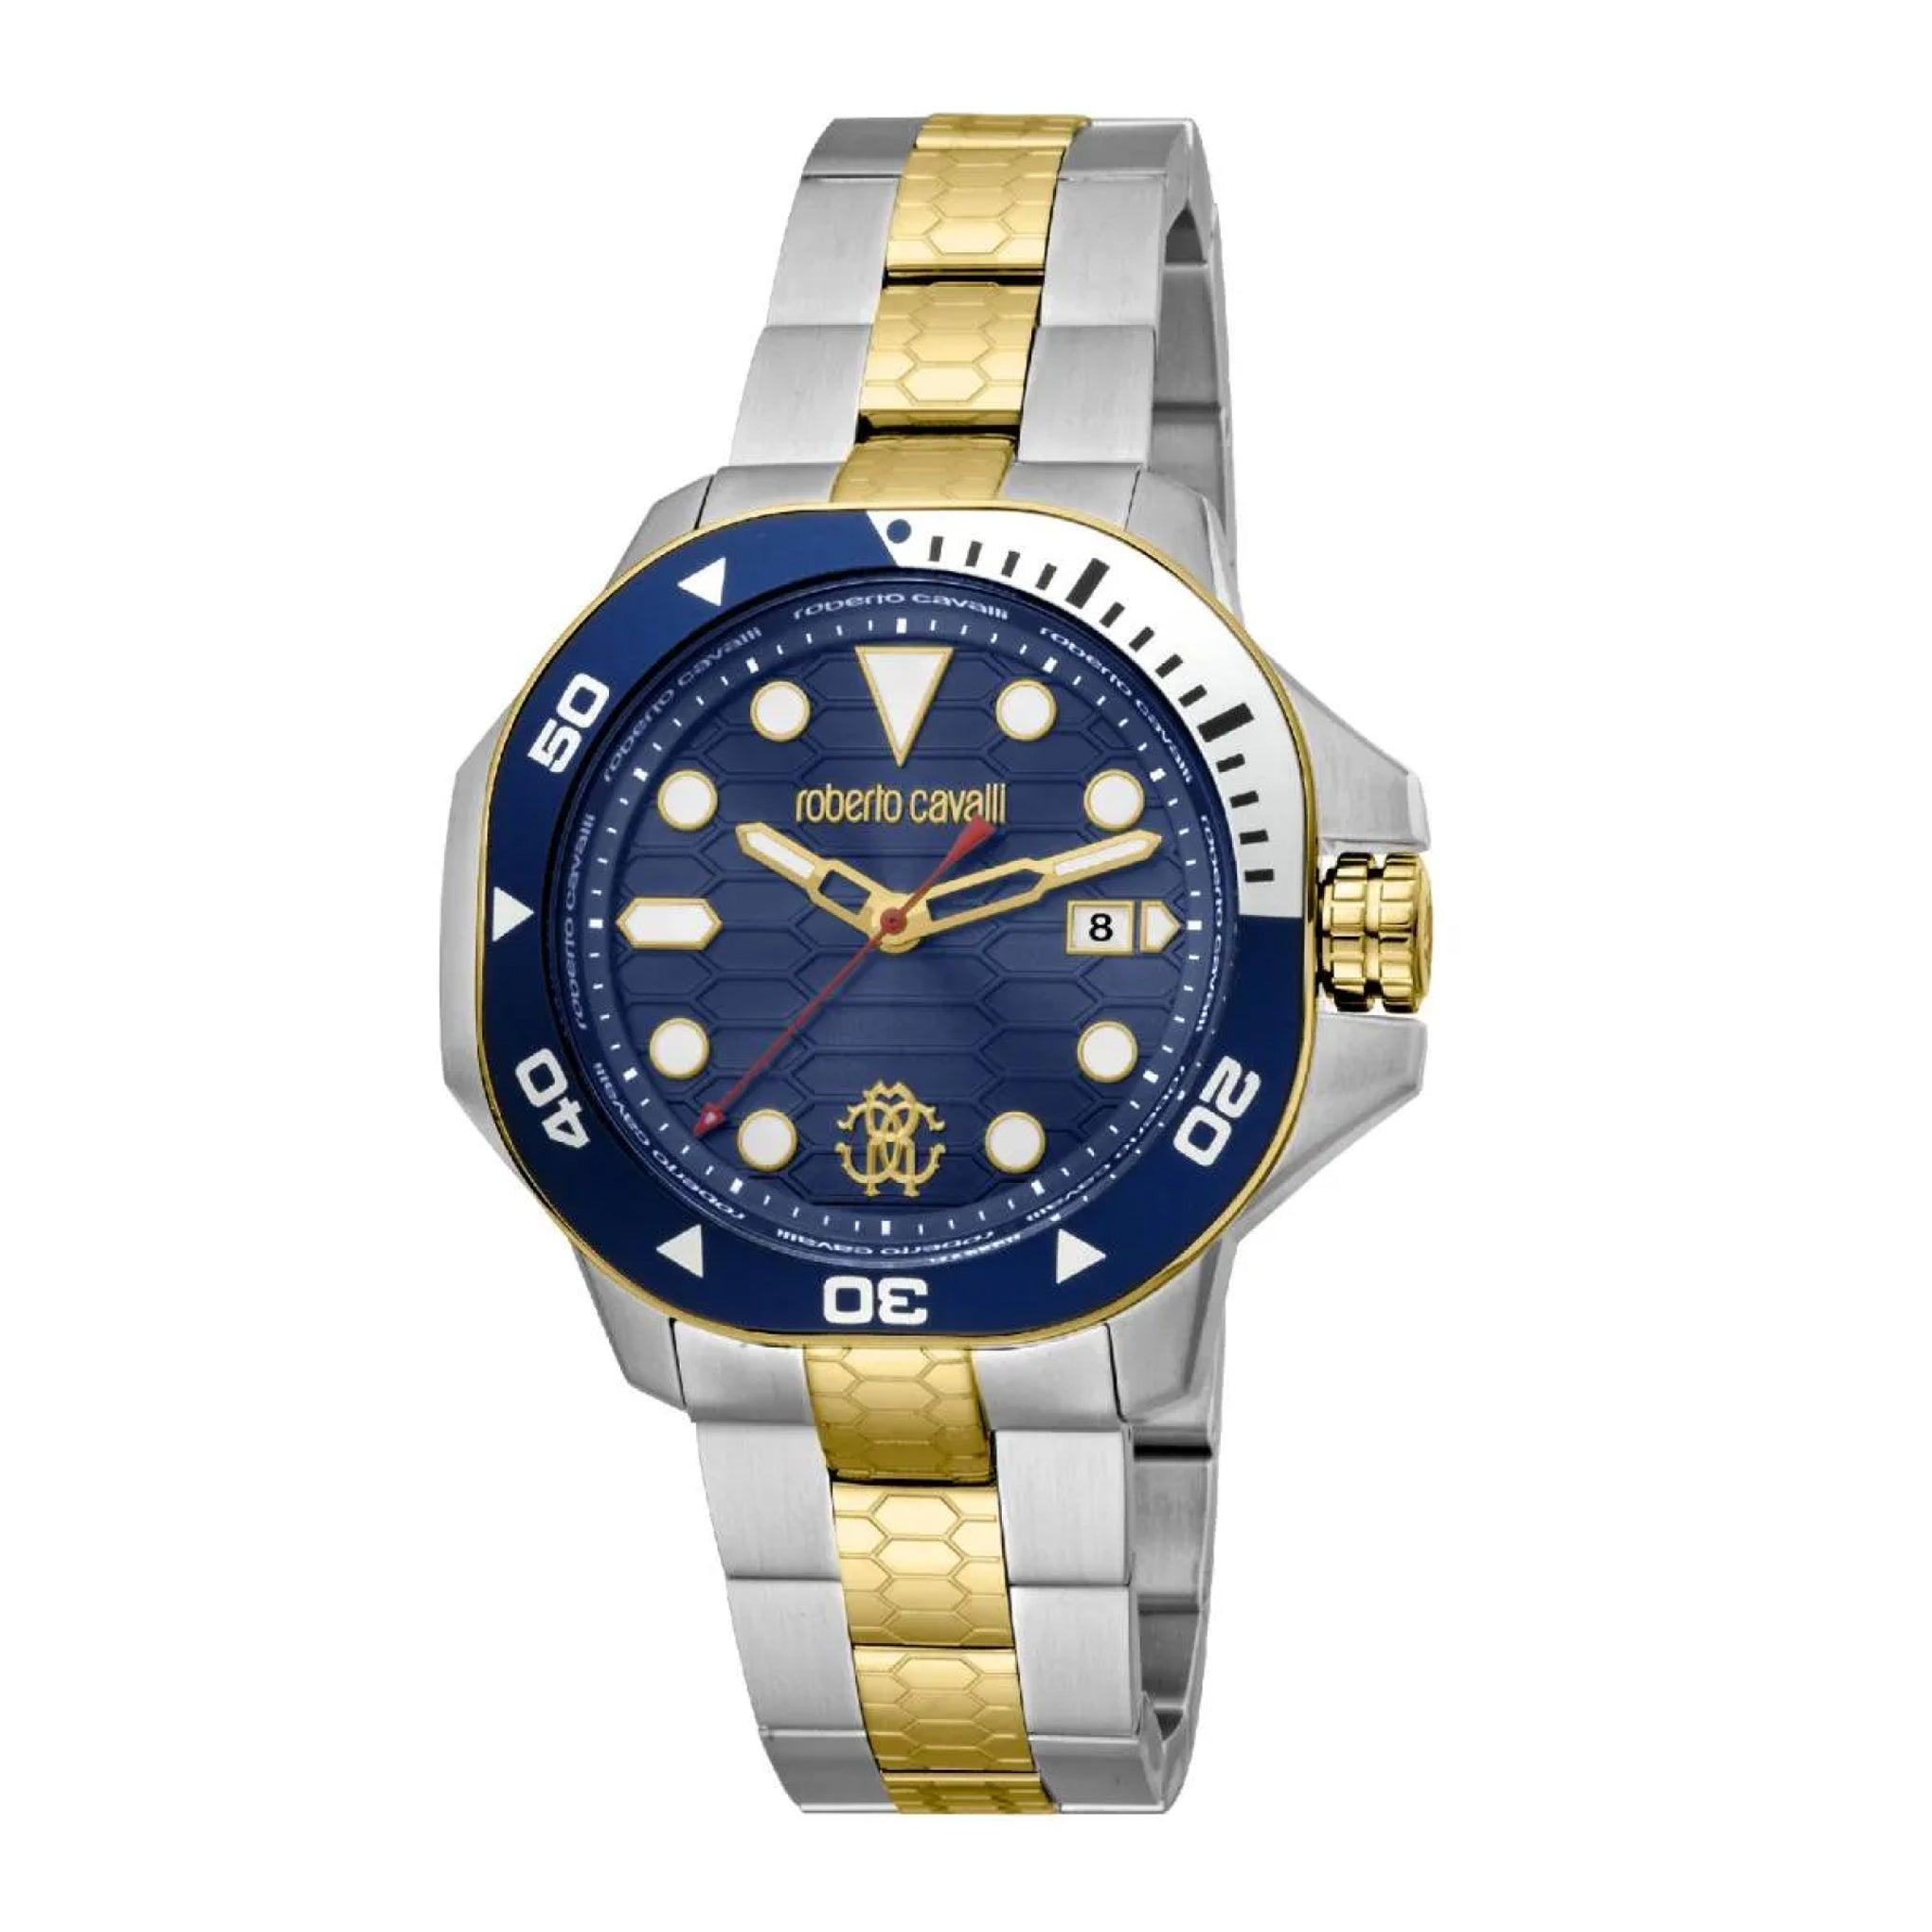 Roberto Cavalli Men's Spiccato Two Tone Silver & Gold Color Watch Rc5g044m0035